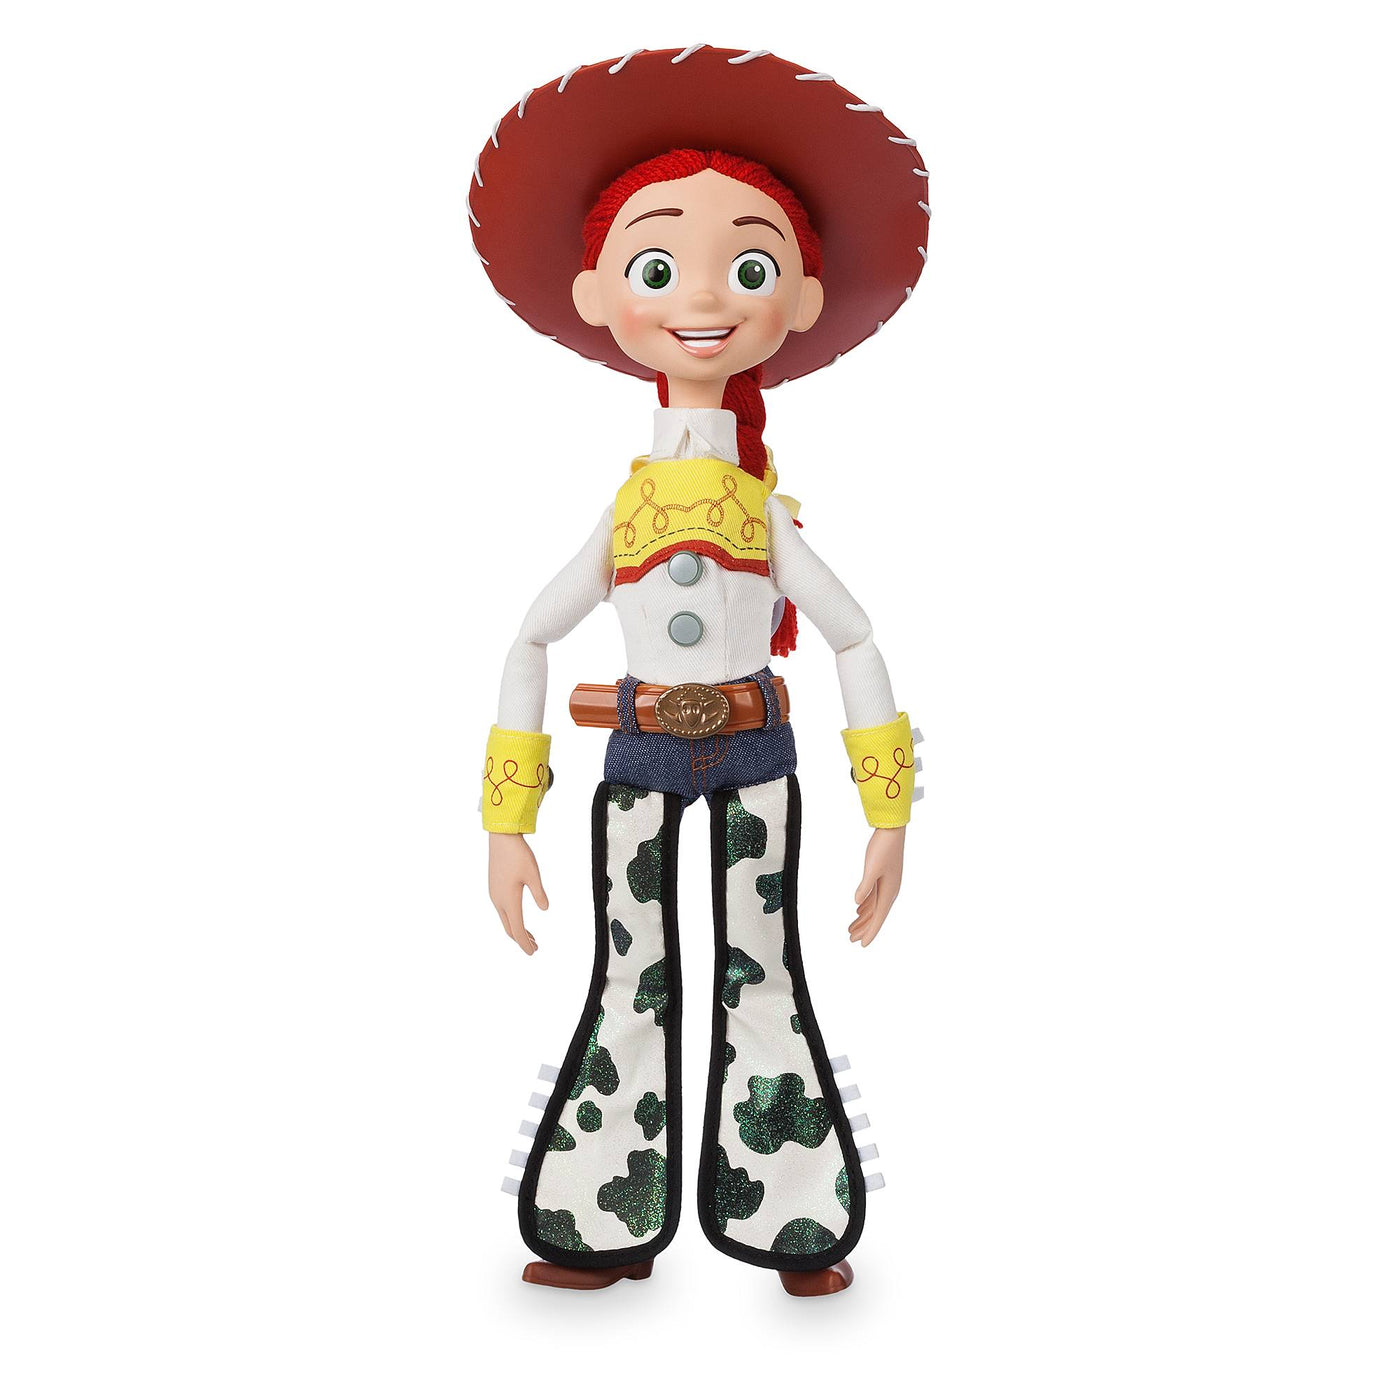 Disney Pixar Toy Story Talking Jessie Figure Pull String New with Box